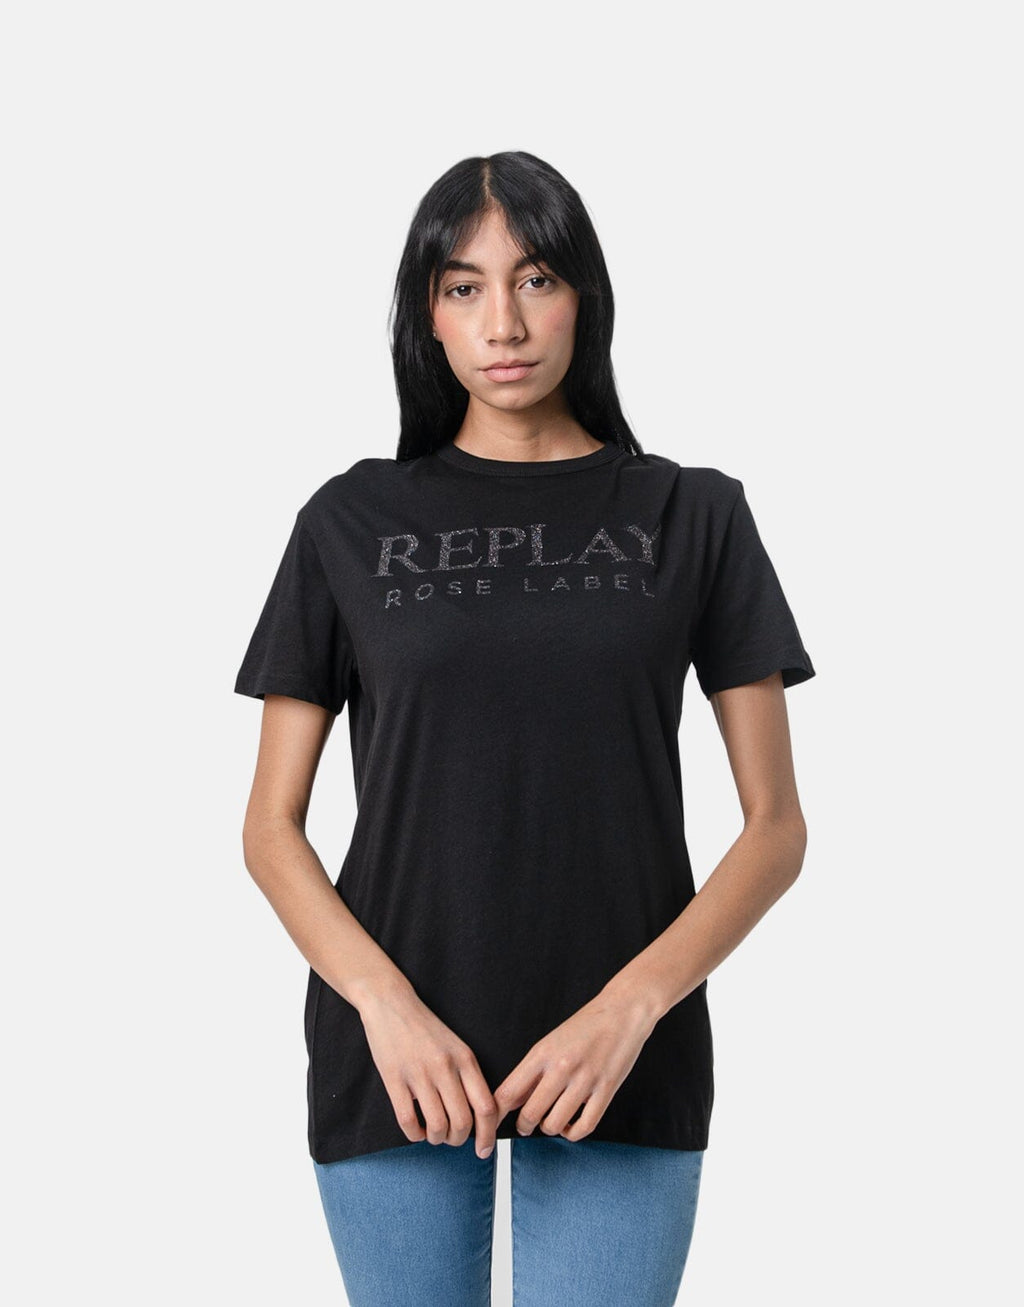 T-Shirt Replay Label Black Rose